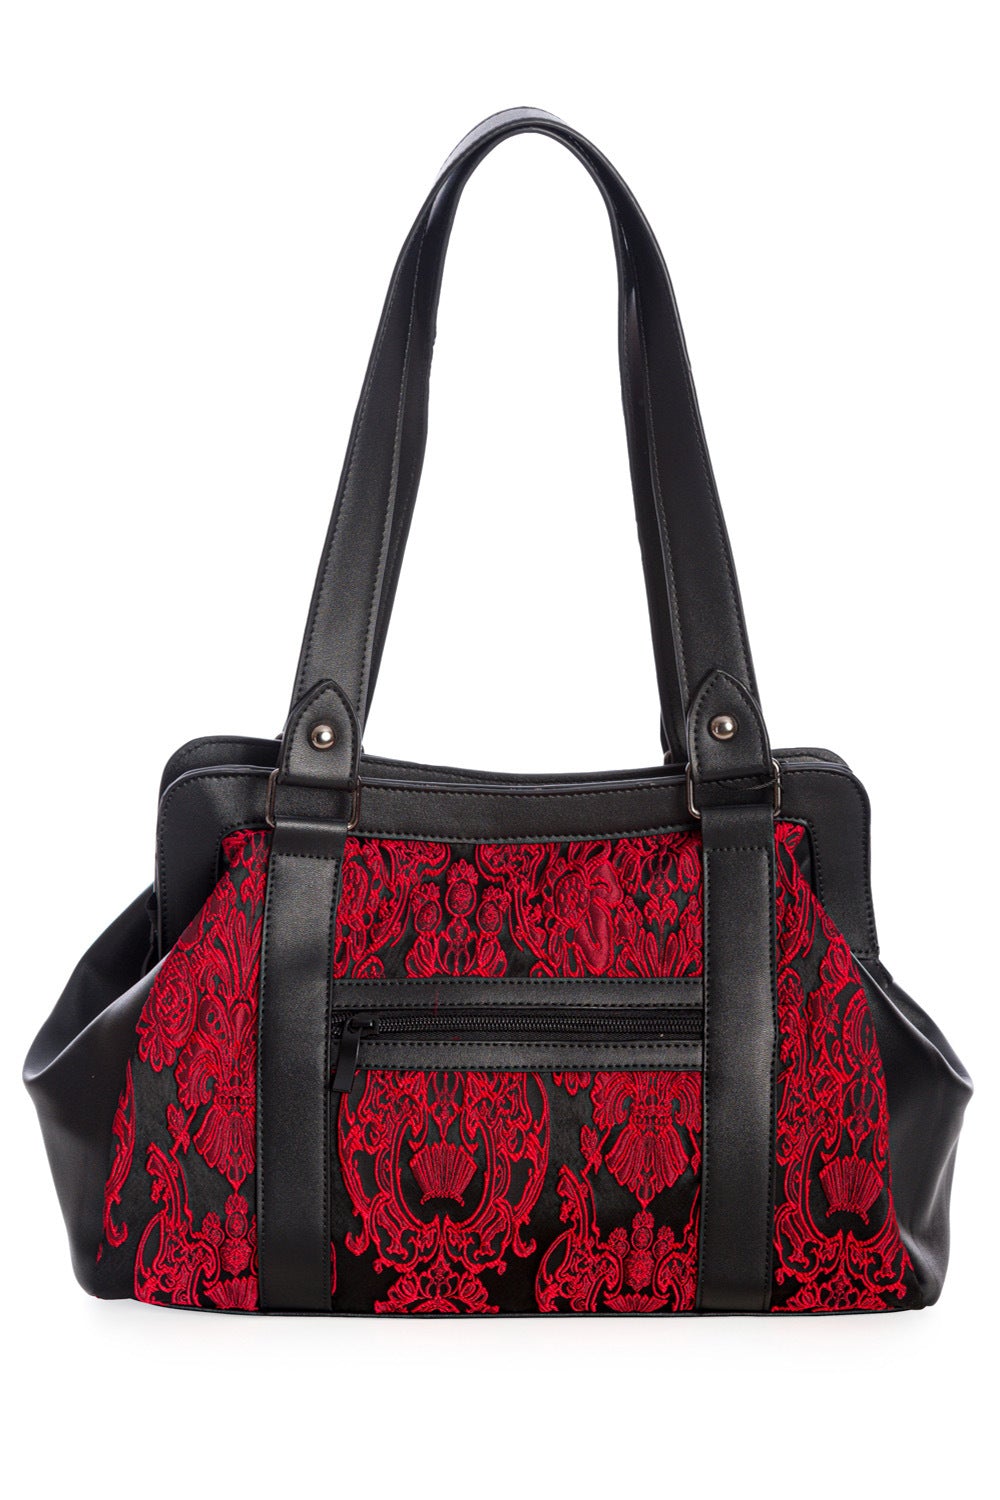 Banned Alternative Corset Lace Anemone Handbag